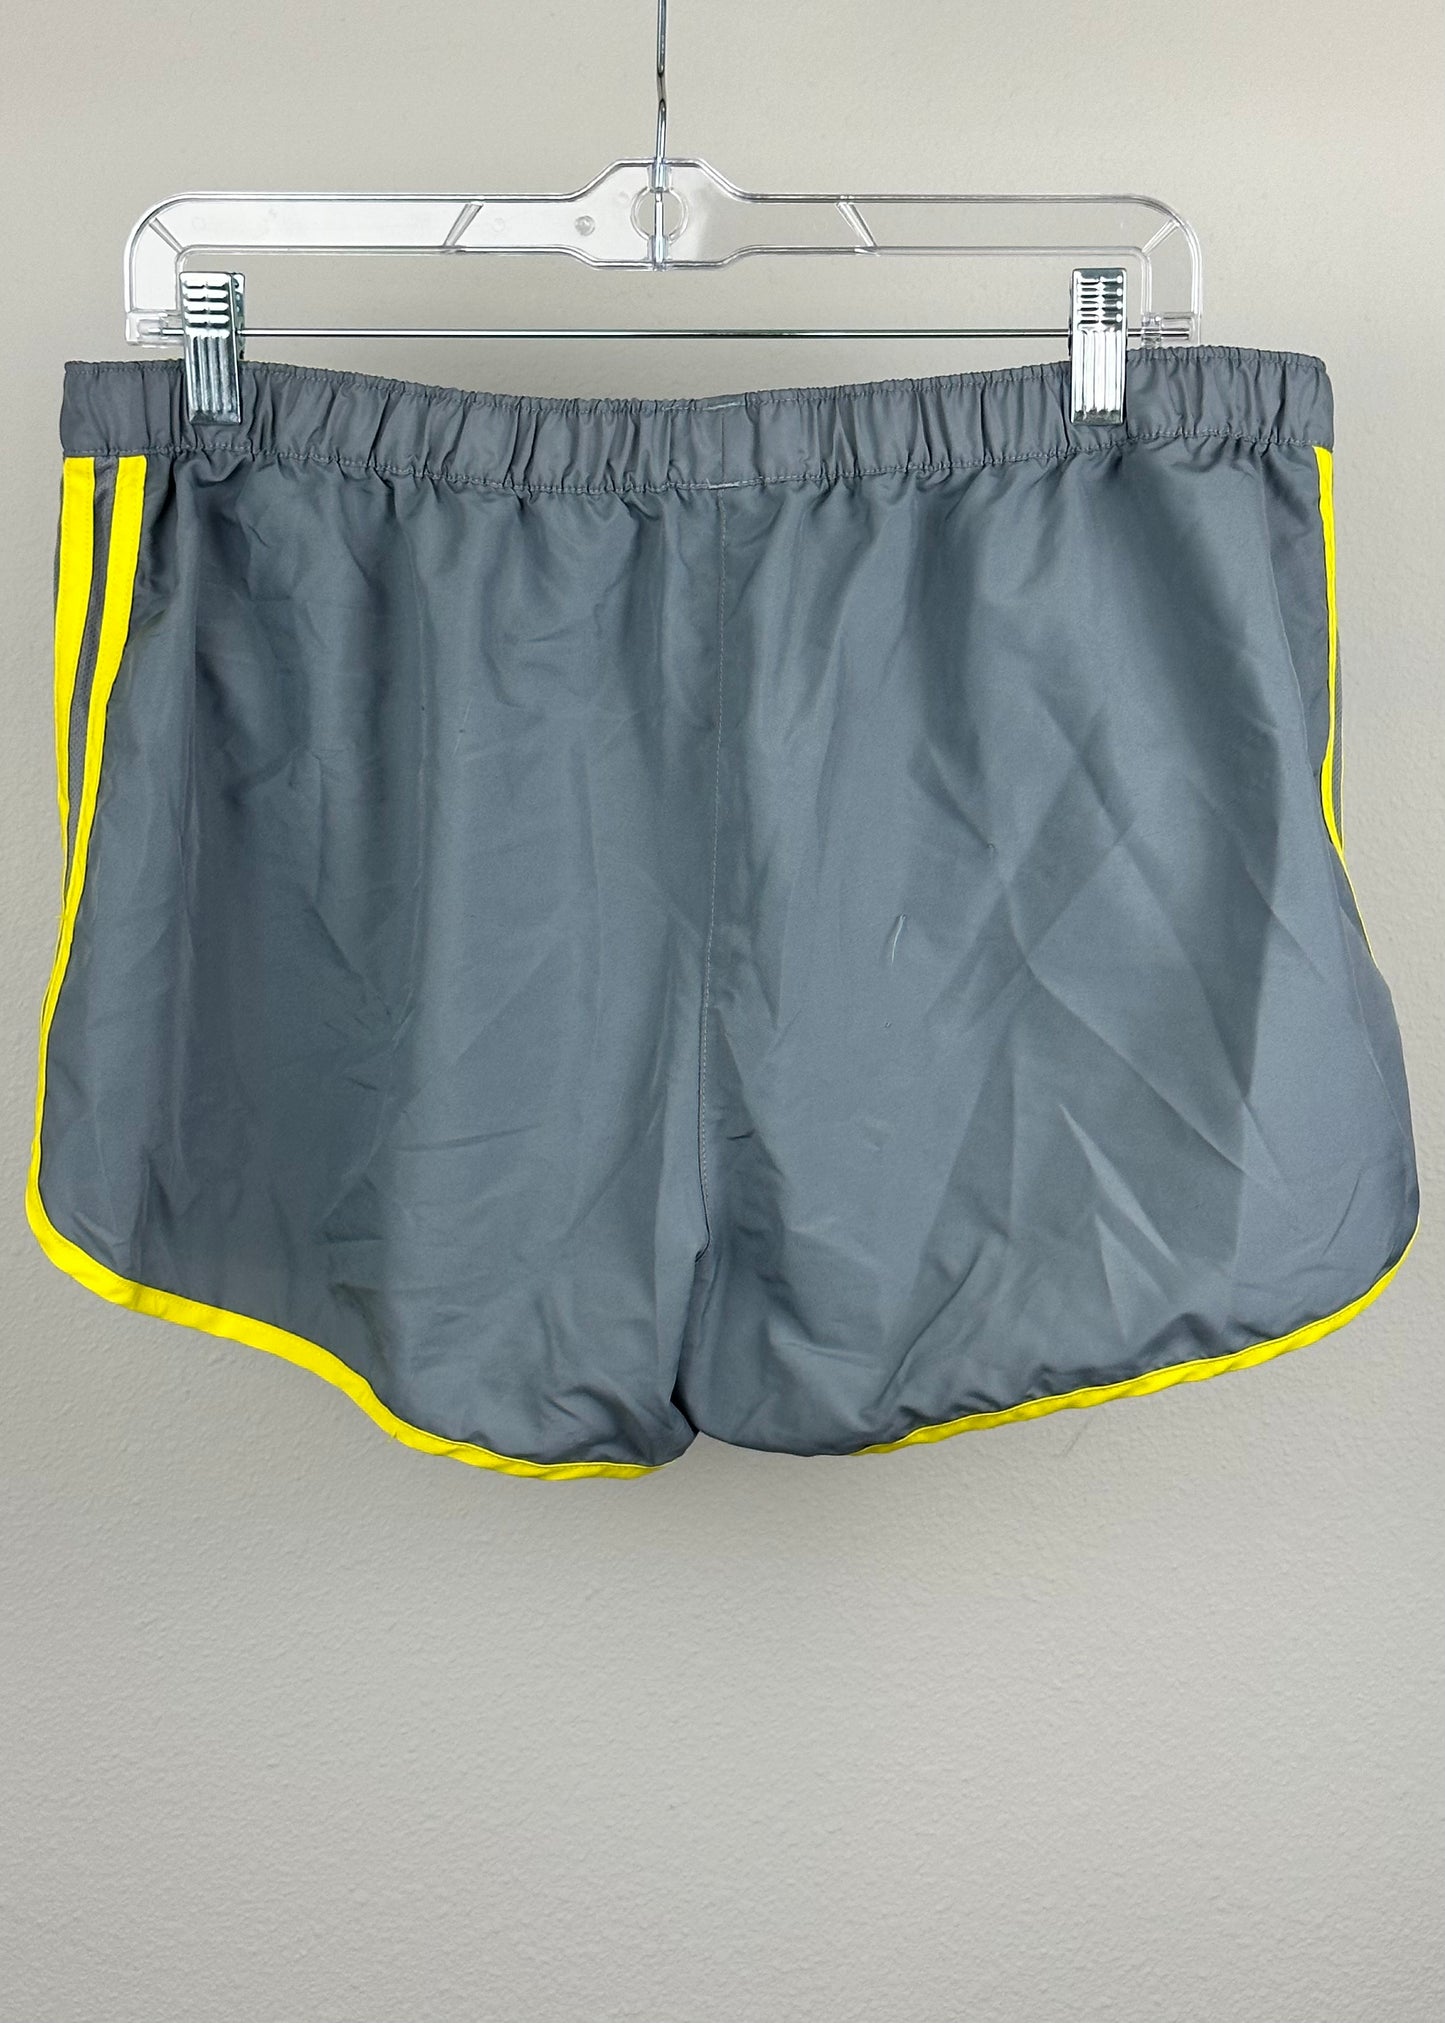 Adidas Yellow Stripe Running Shorts